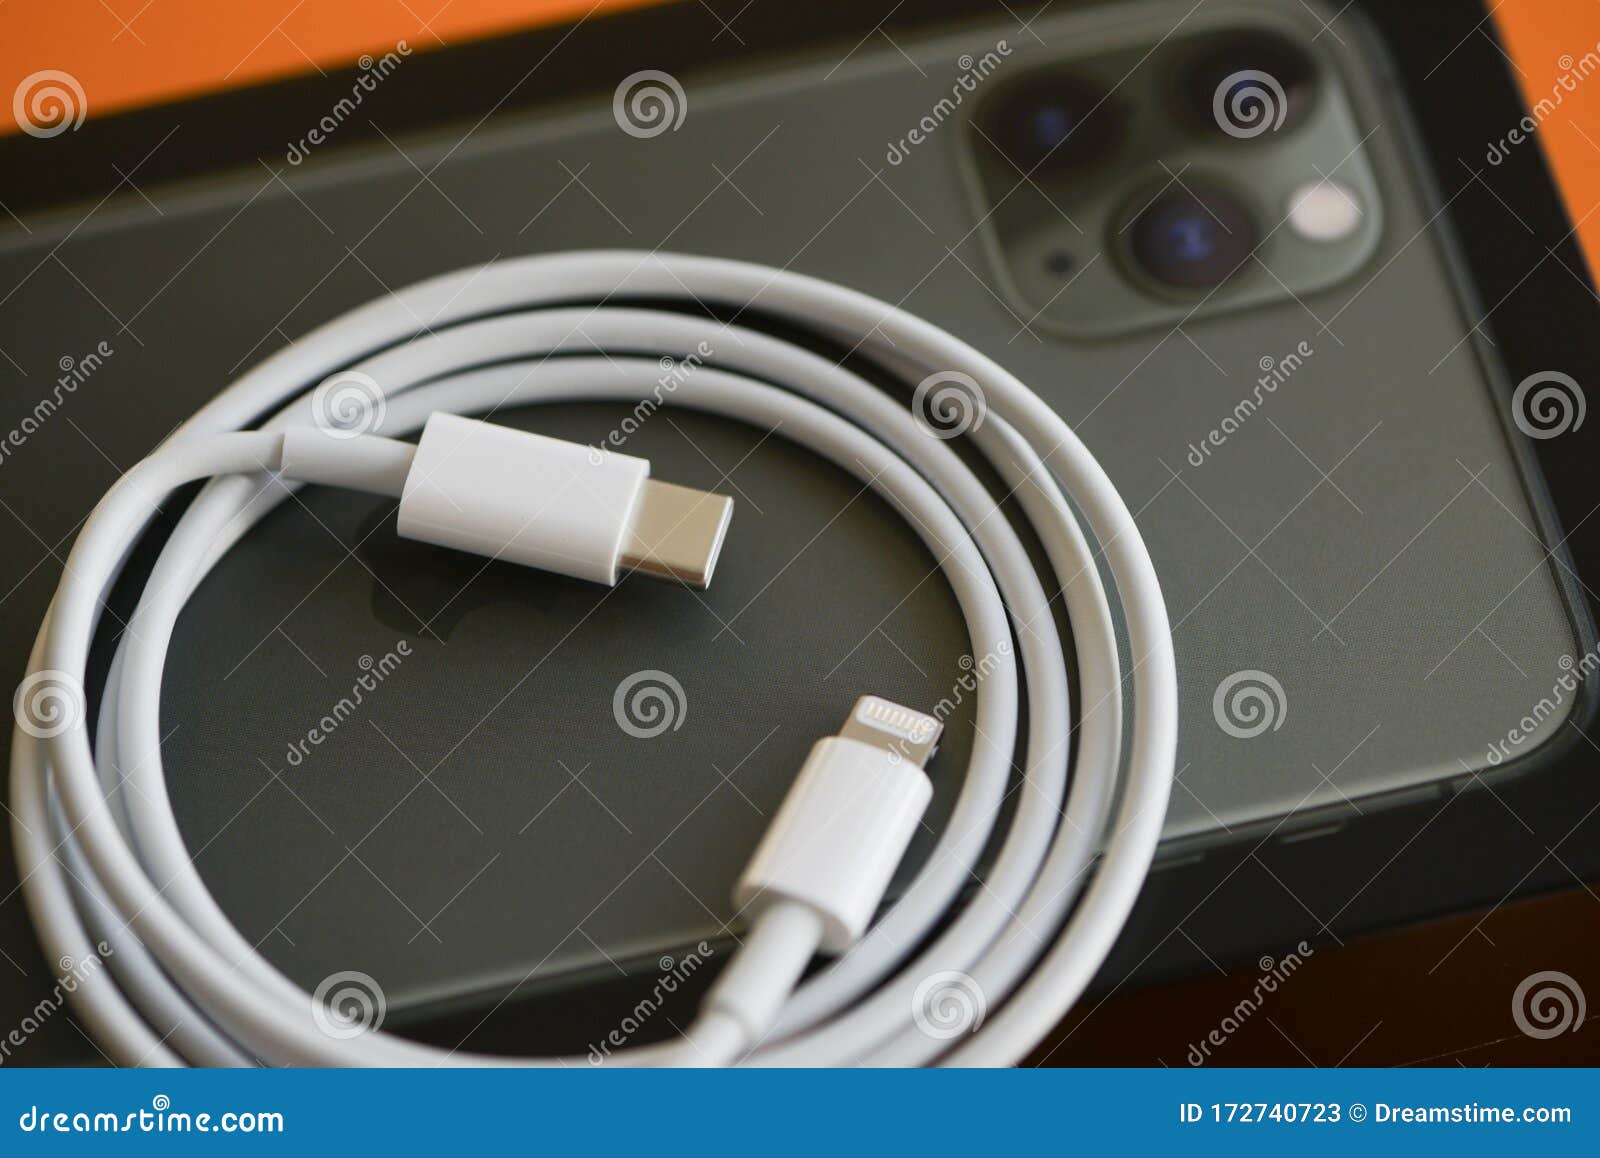 Cable iPhone 11 Pro Max Carga Rápida Usb Tipo C Lightning